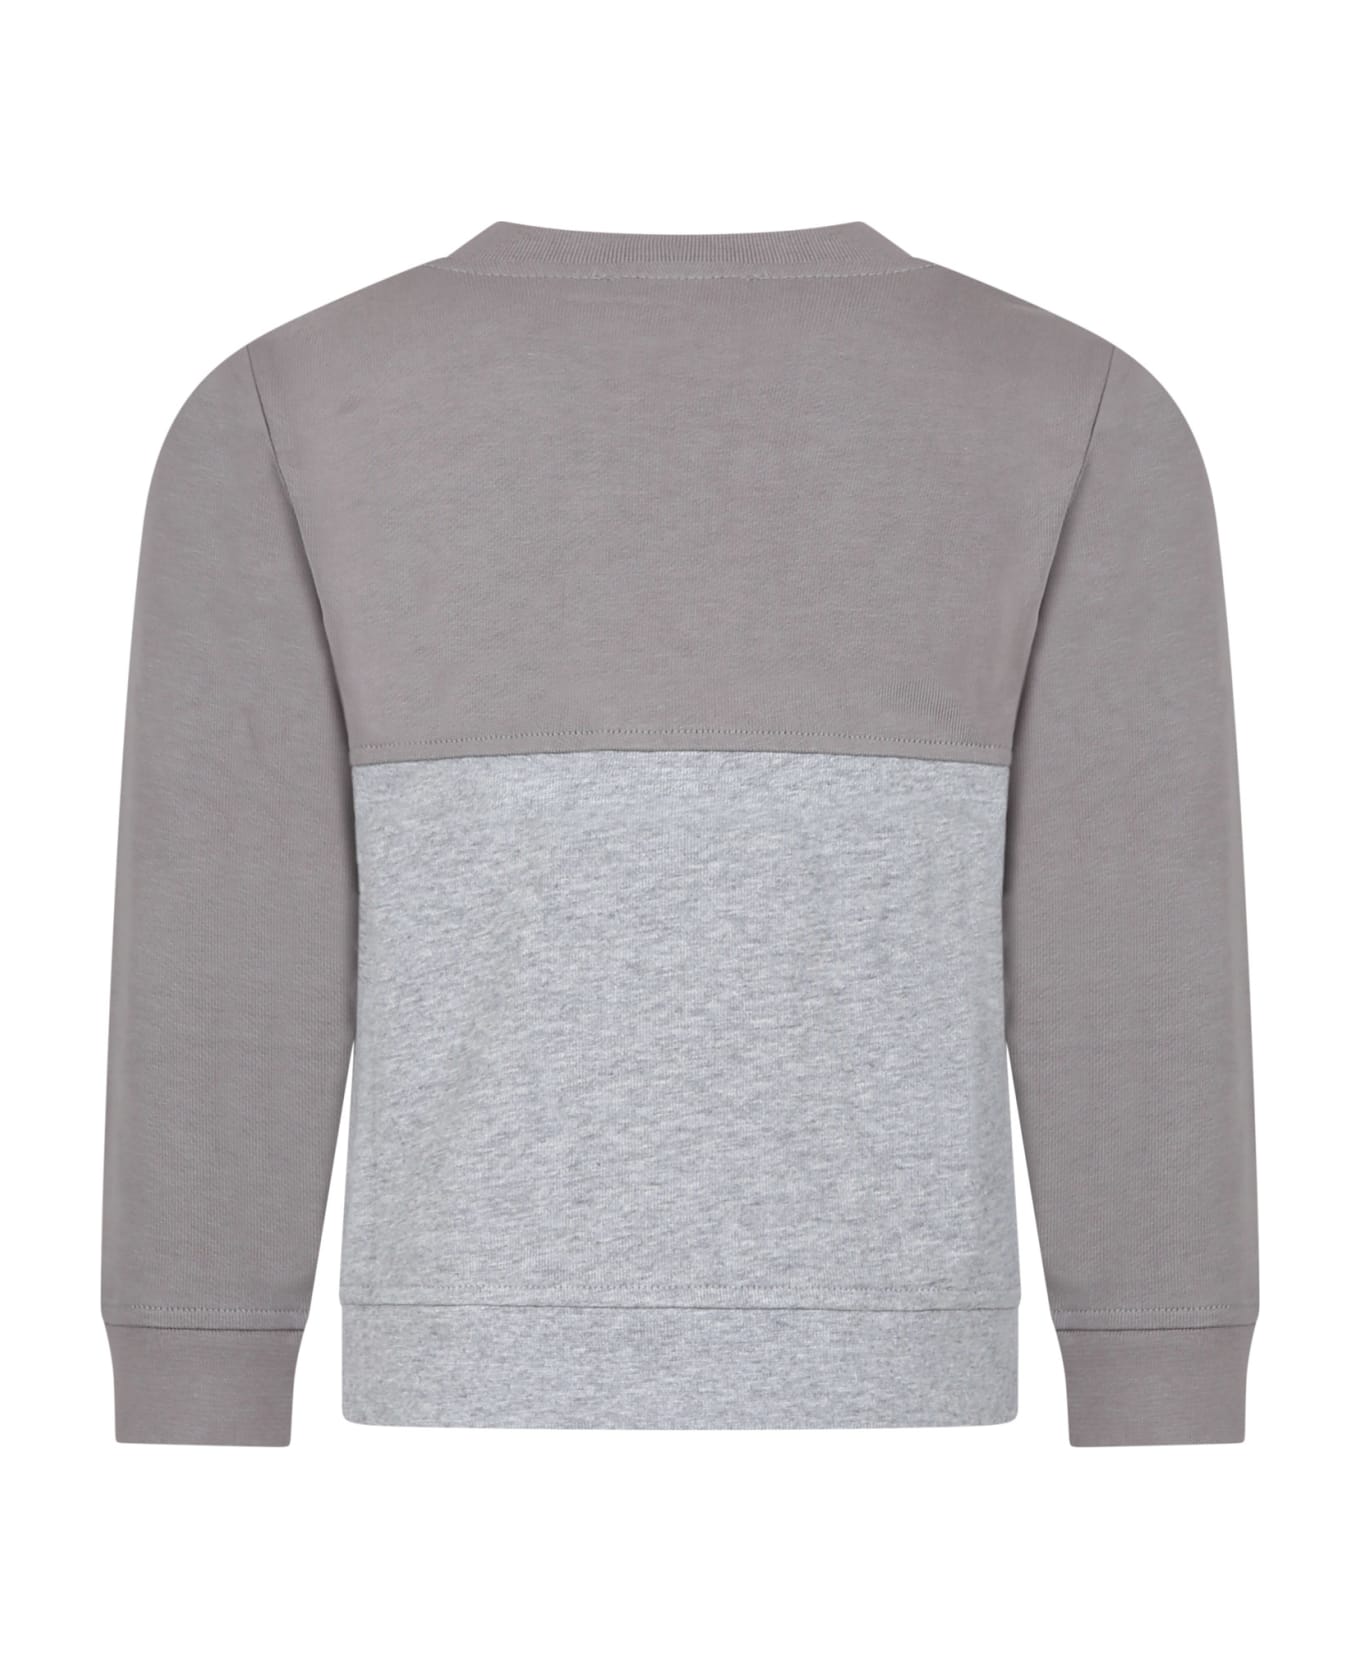 Stella McCartney Kids Gray Sweatshirt For Boy With Shark - Grey